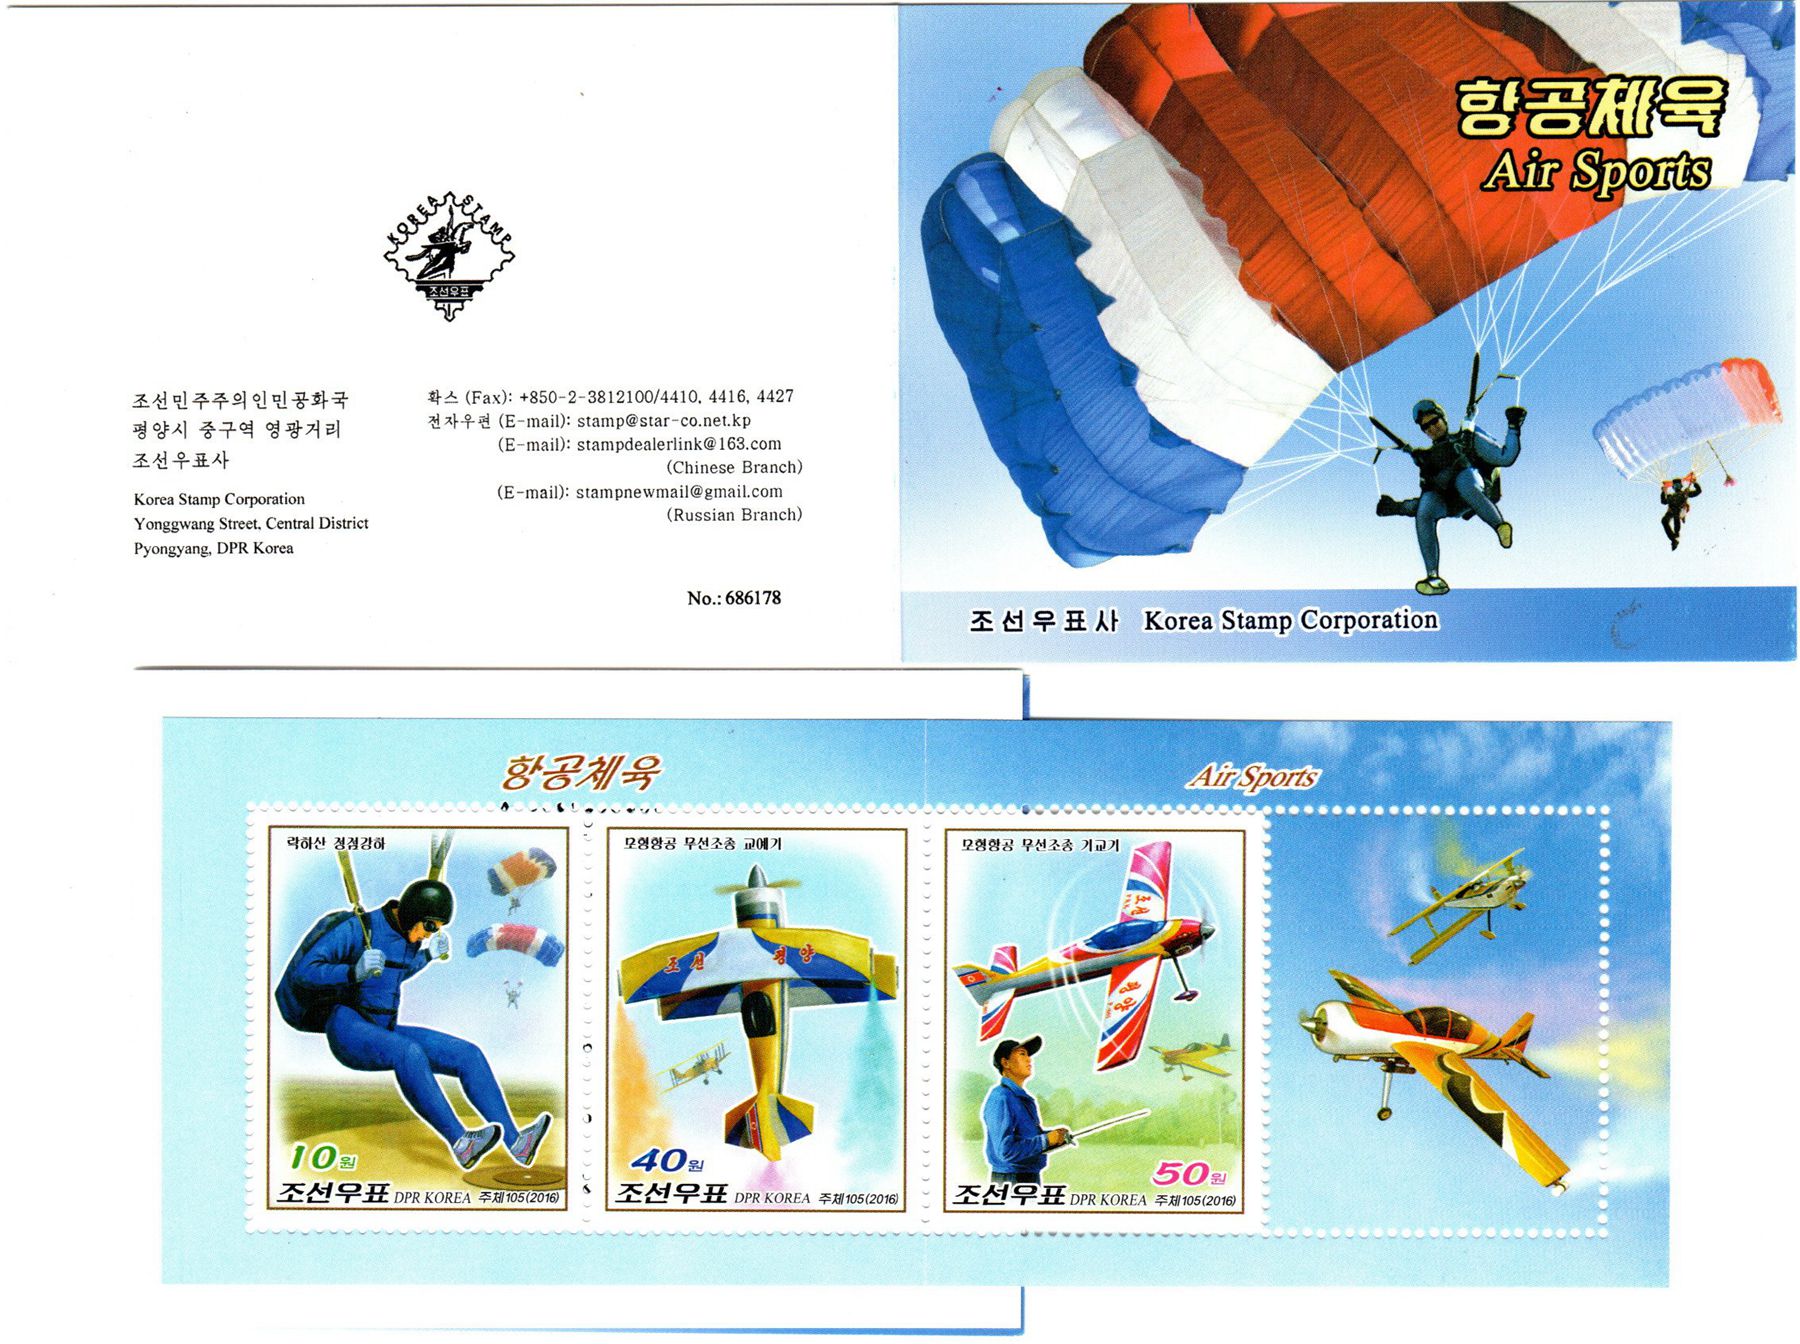 L9096, Korea "Air Sports" Stamp Booklet, 2016